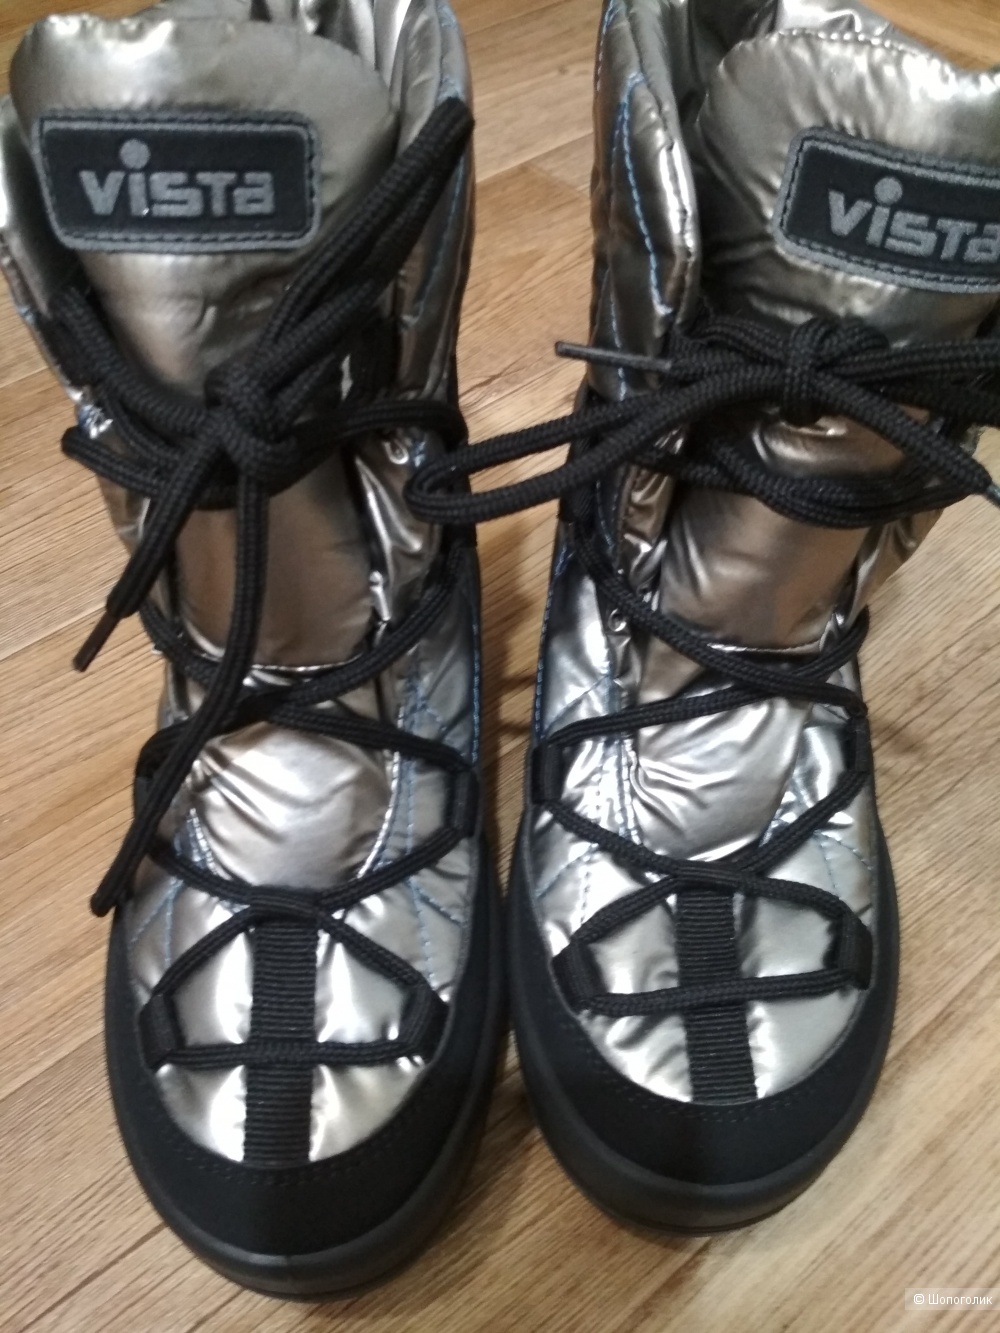 Ботинки Vista размер 31